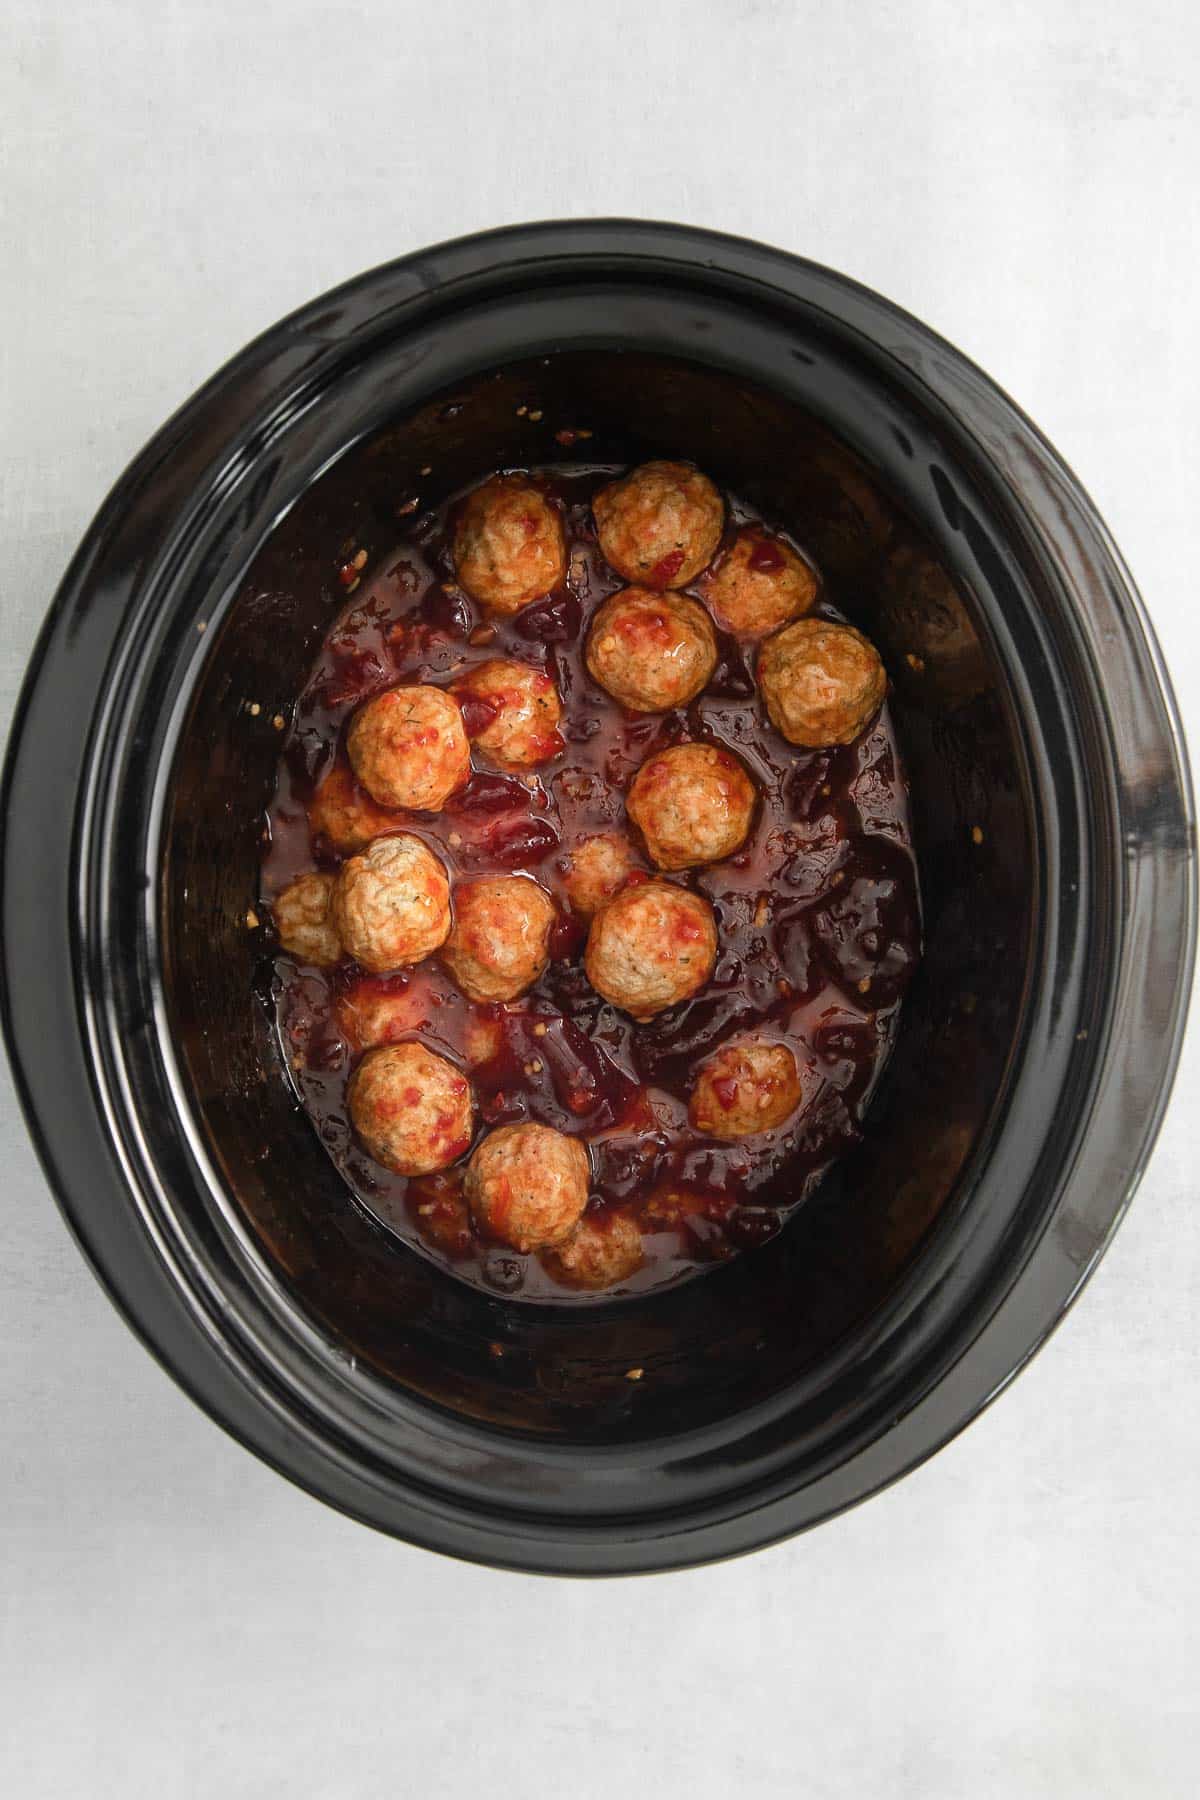 meatballs tossed in cranberry sauce mixture in a black crock pot.